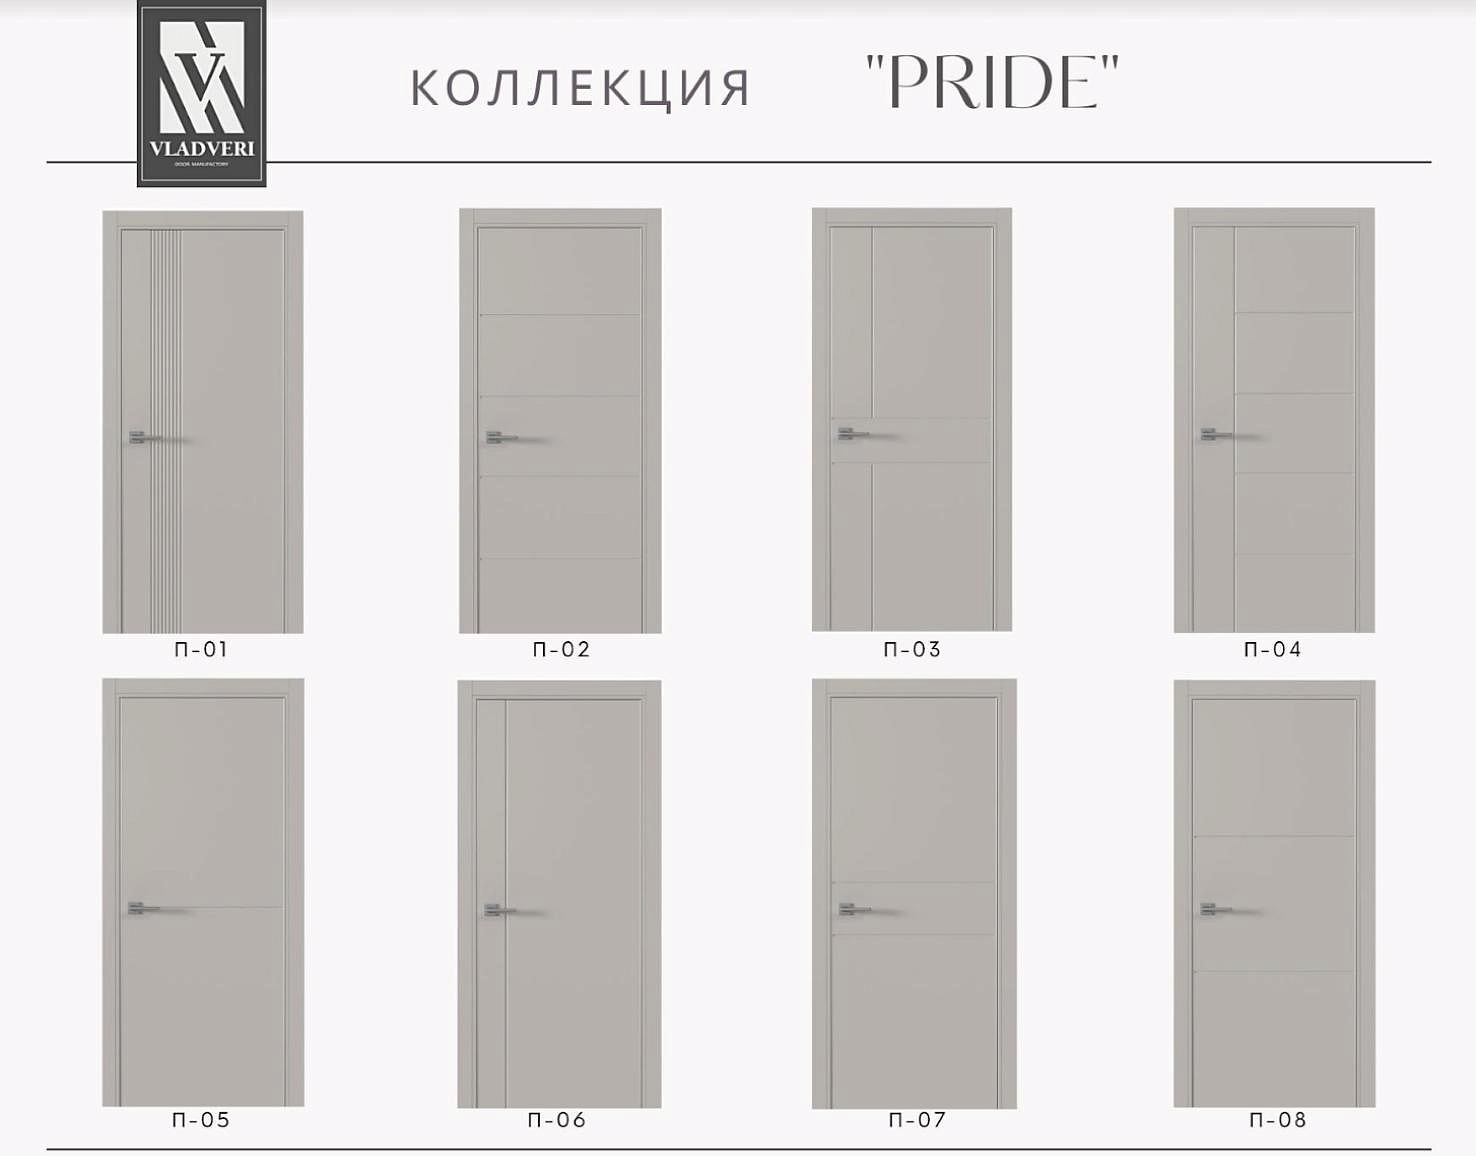 Коллекция дверей Pride